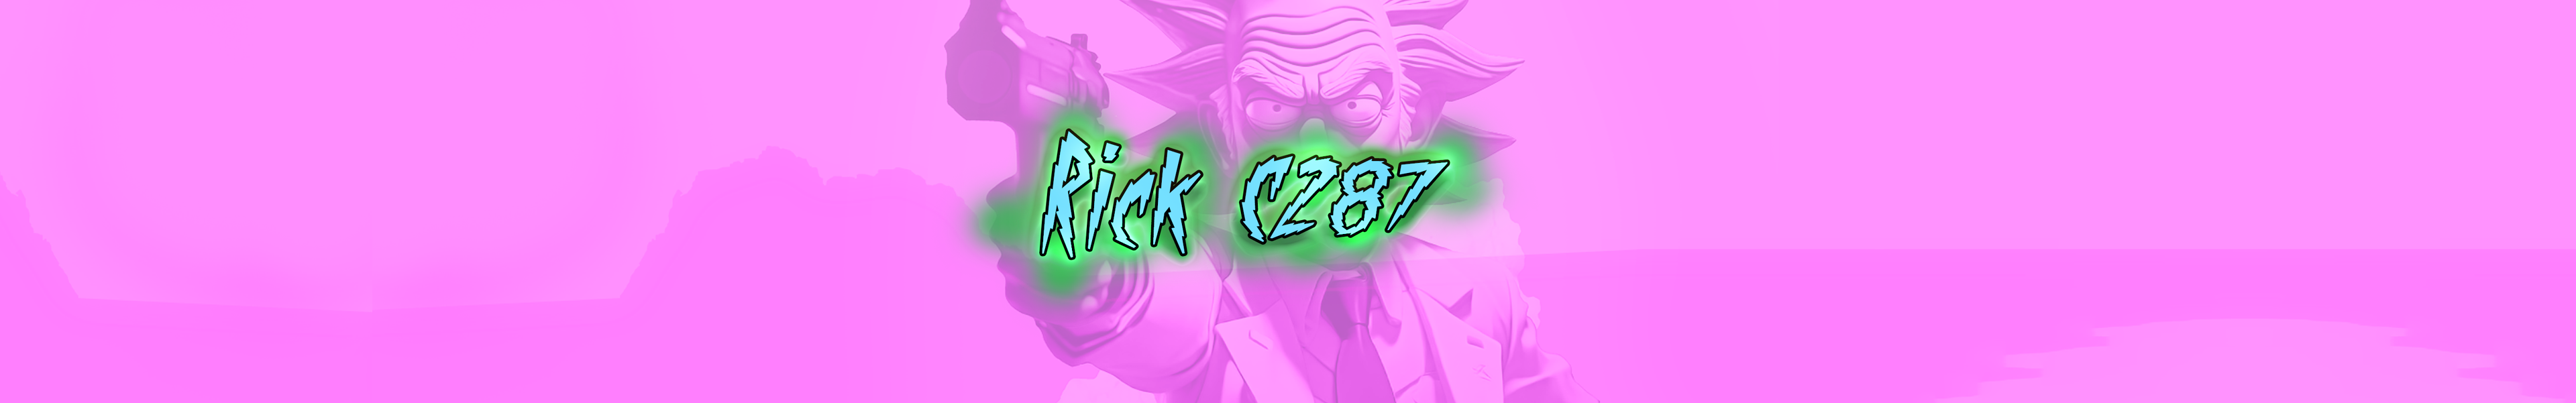 Rick C287